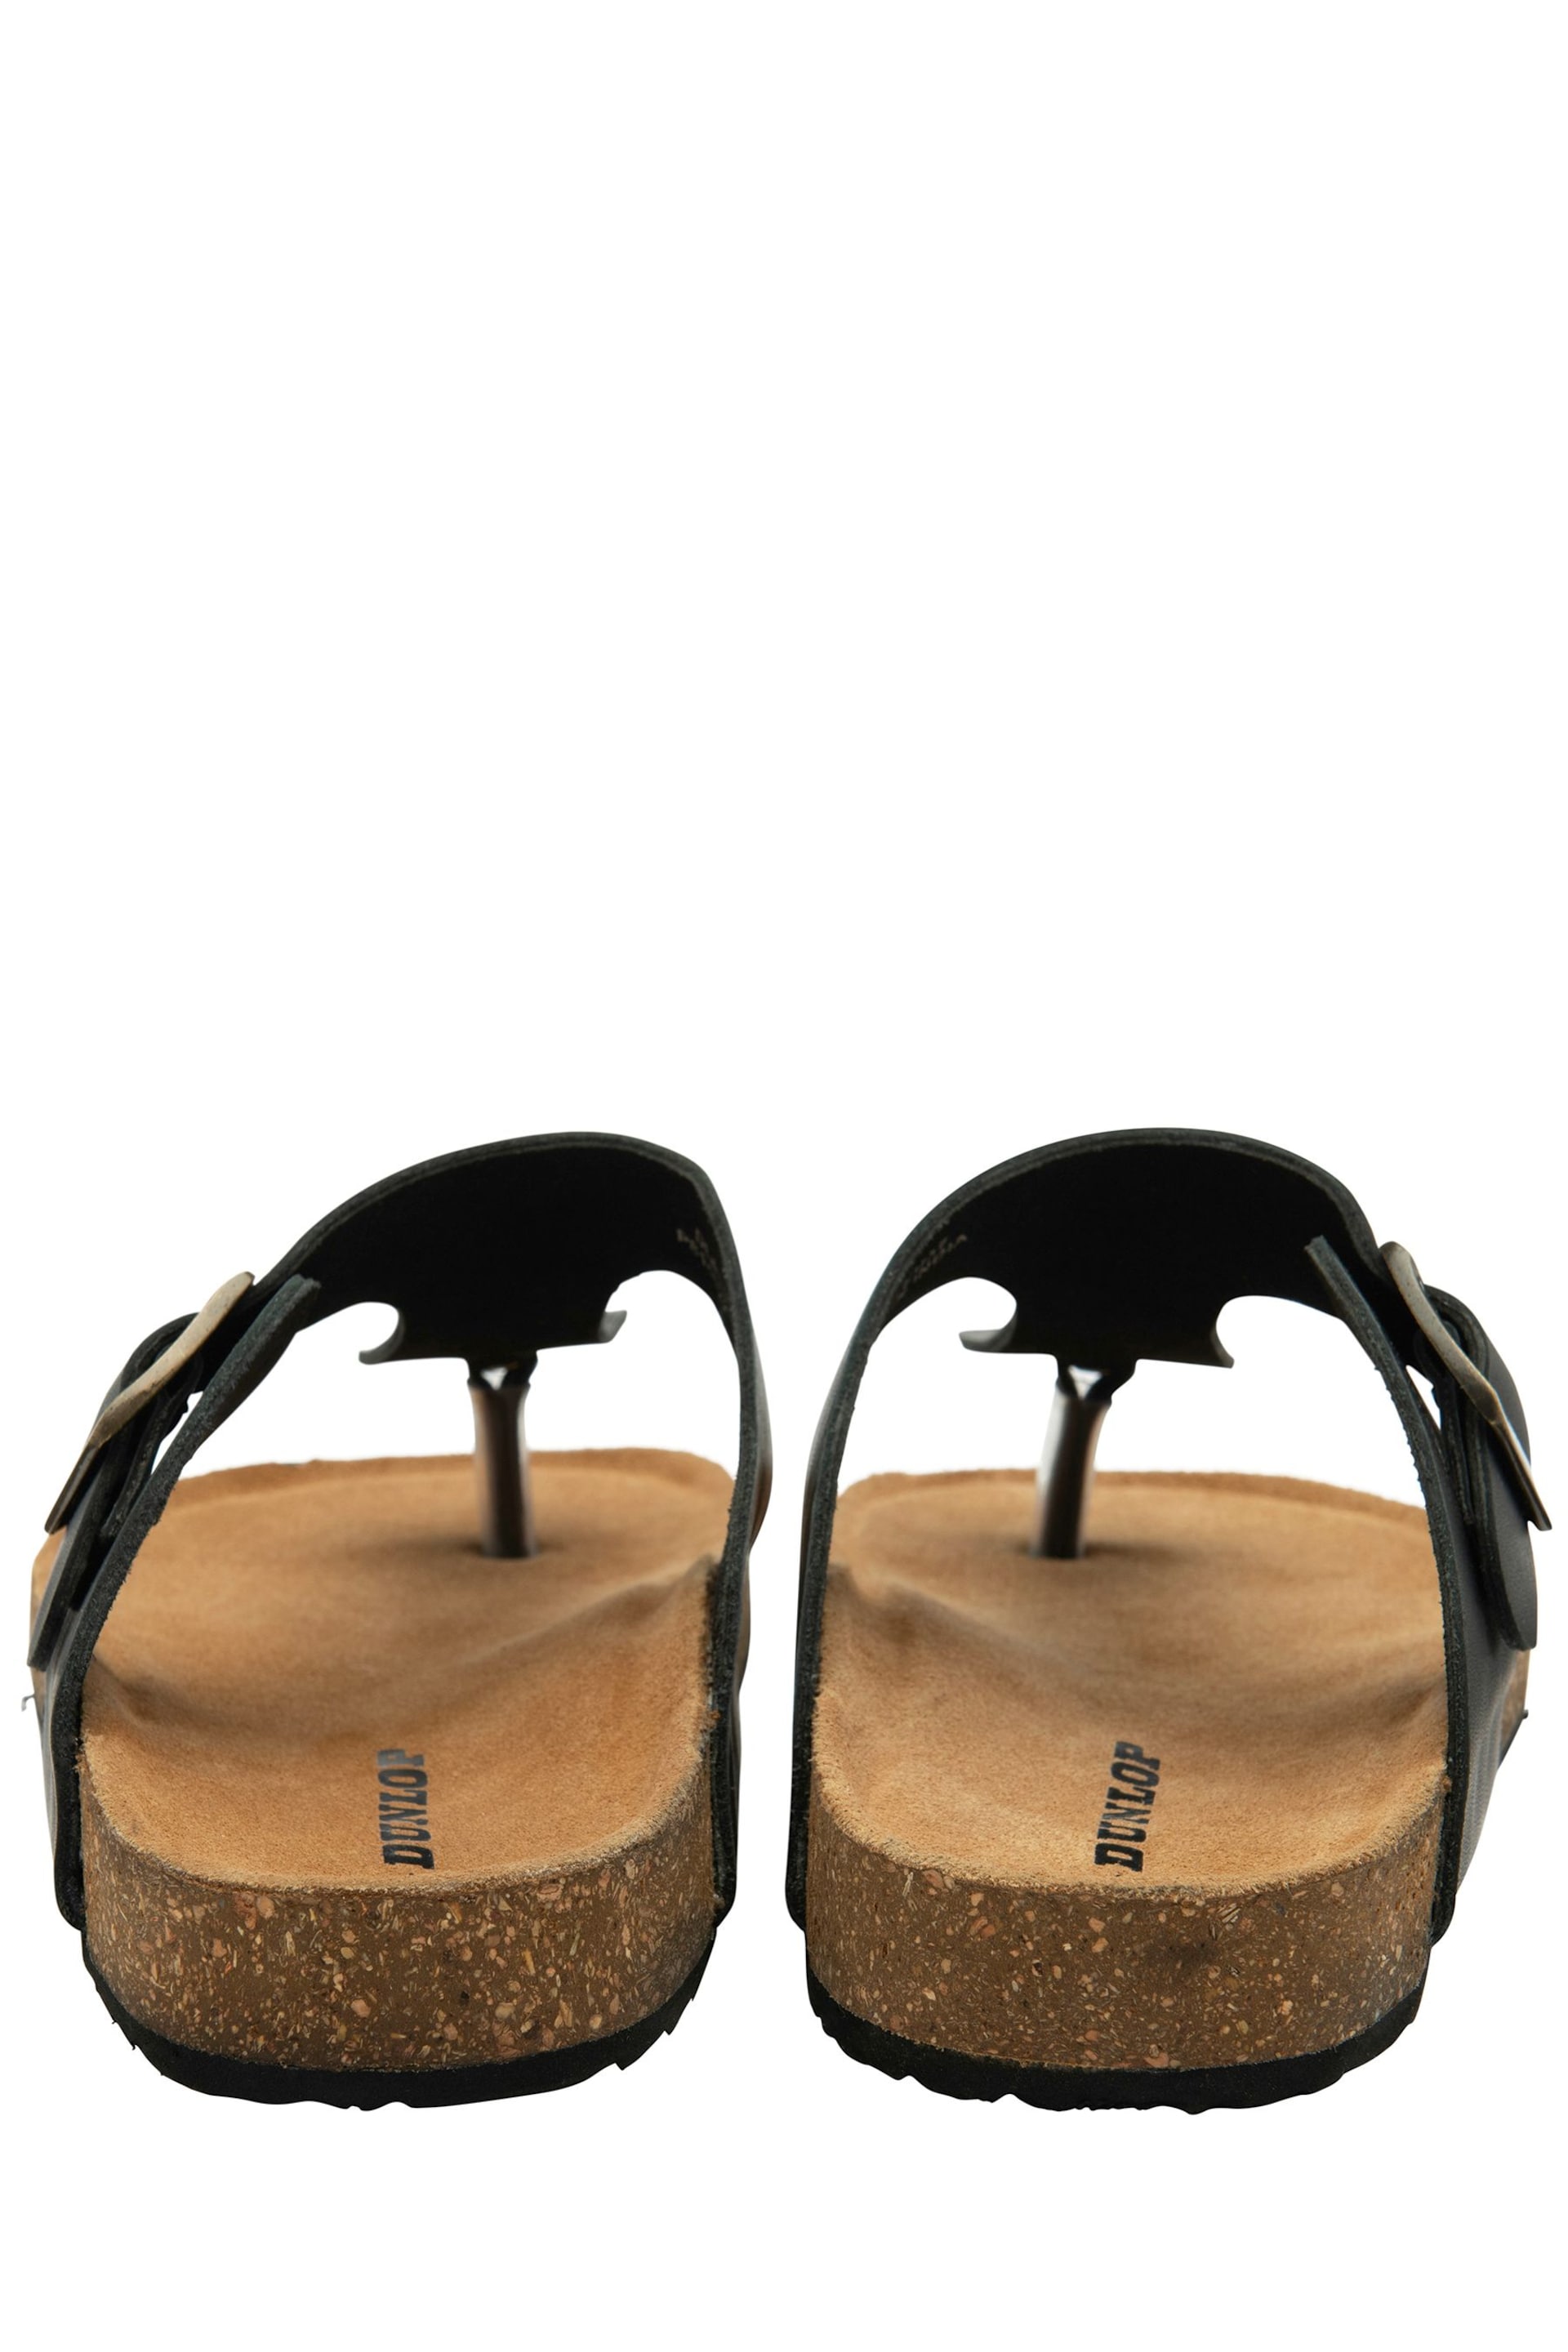 Dunlop Black Ladies Toe Post Footbed Sandals - Image 3 of 4